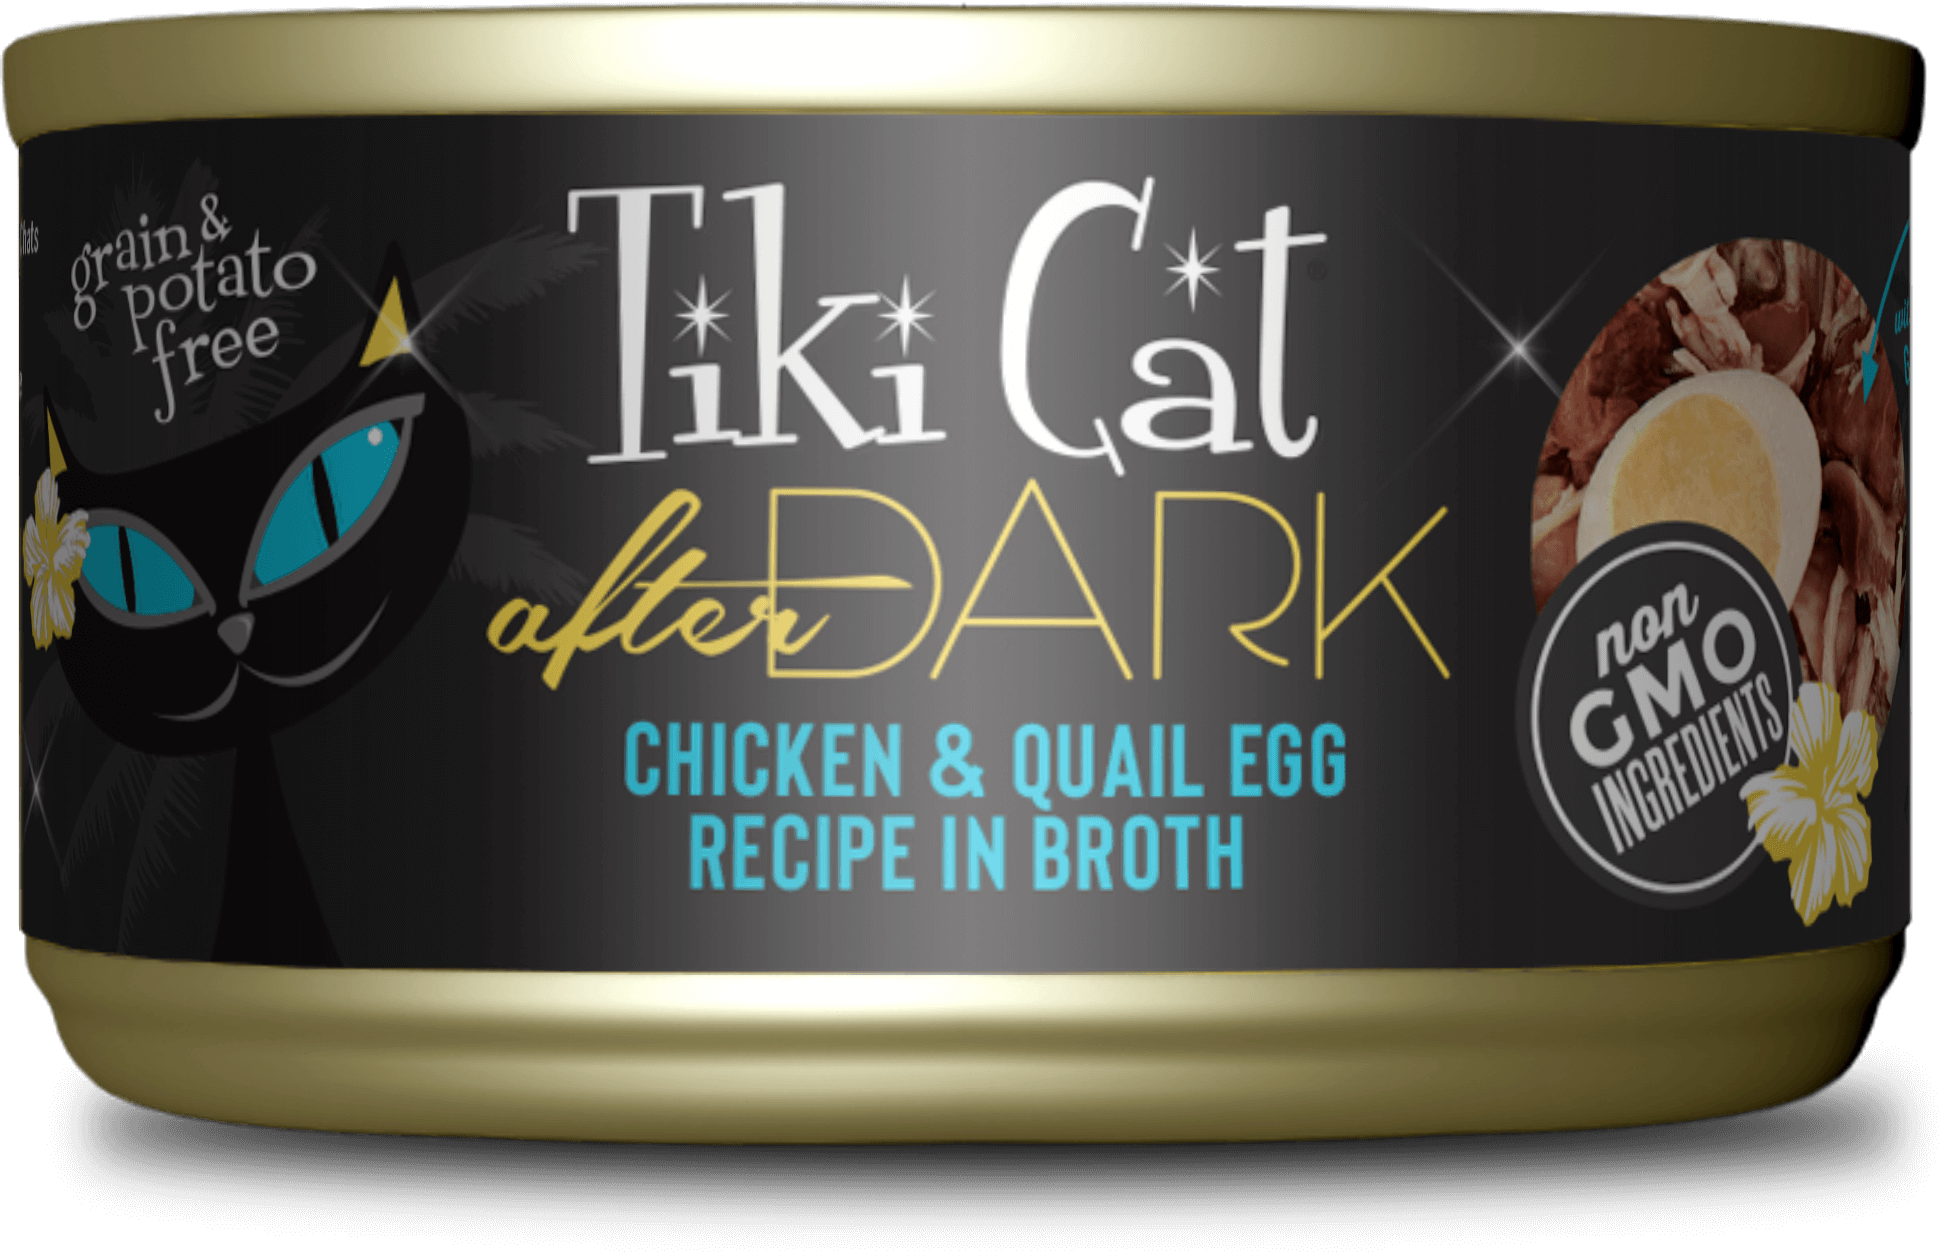 Tiki Cat After Dark Chicken & Quail Egg Recipe In Broth